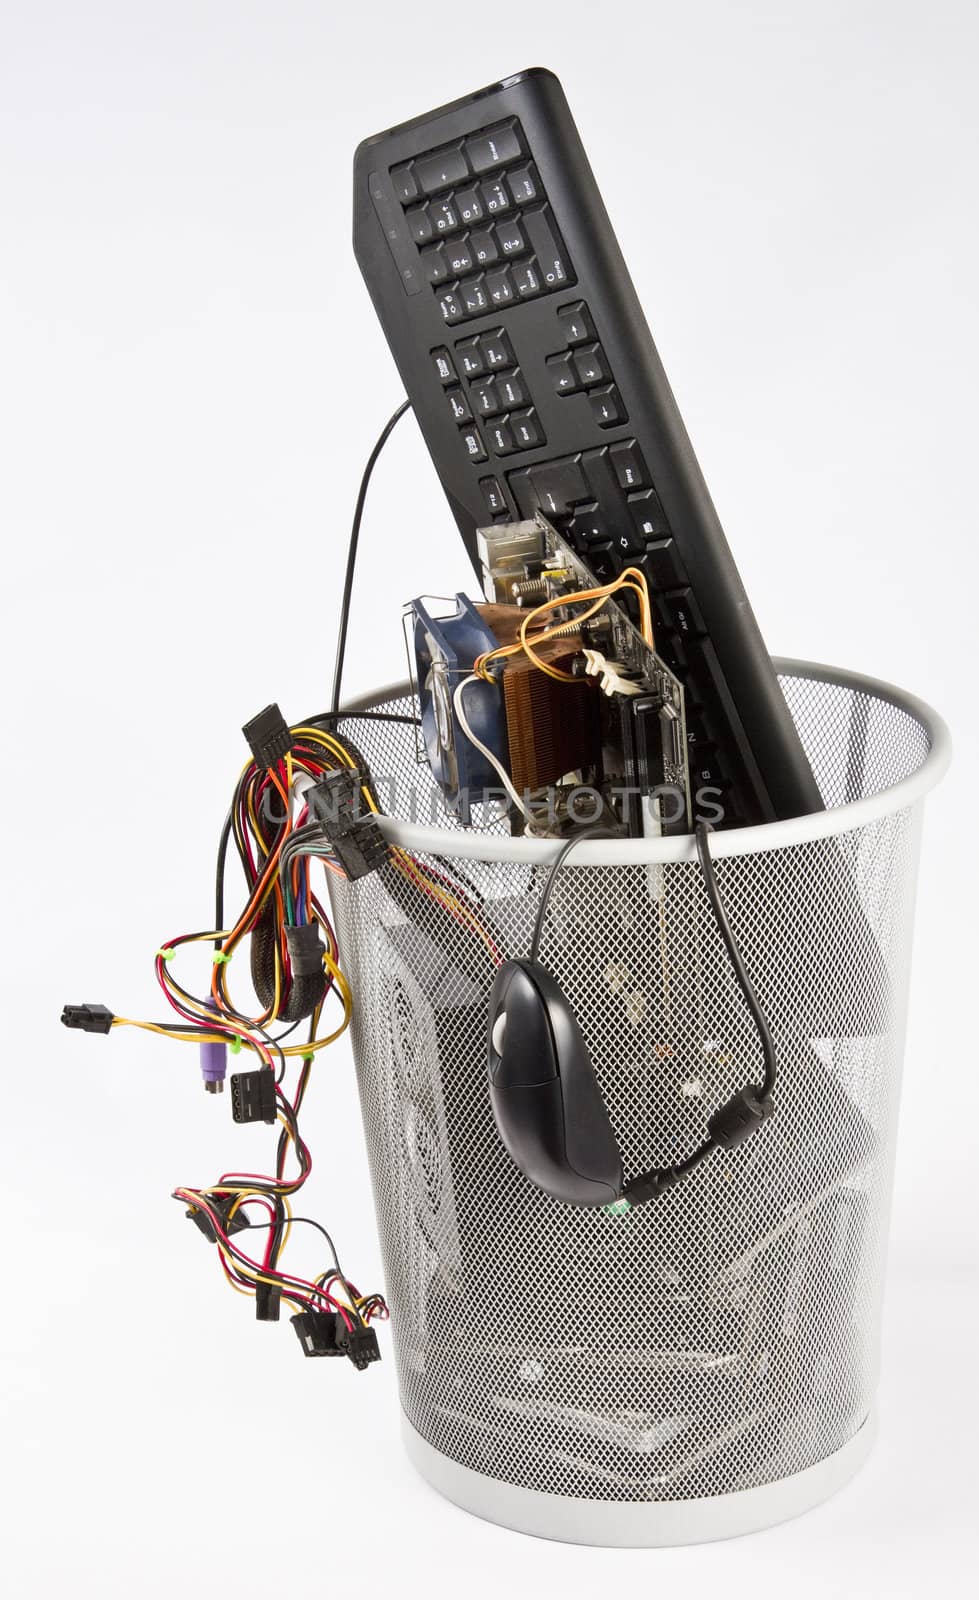 electronic waste by gewoldi